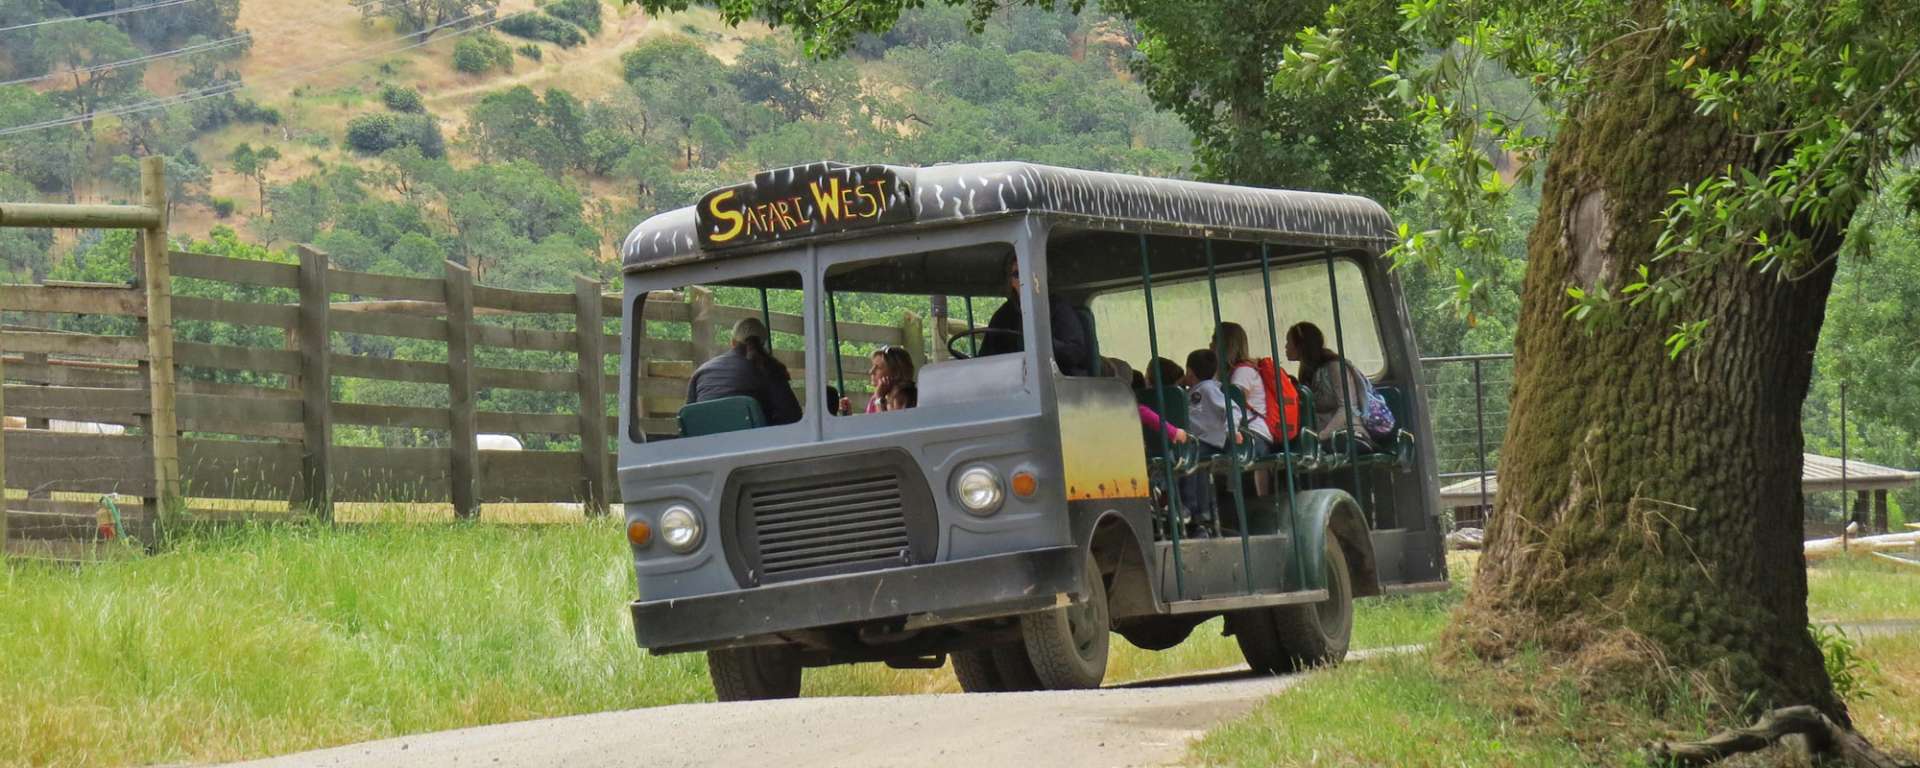 Nairobi Bus Trek